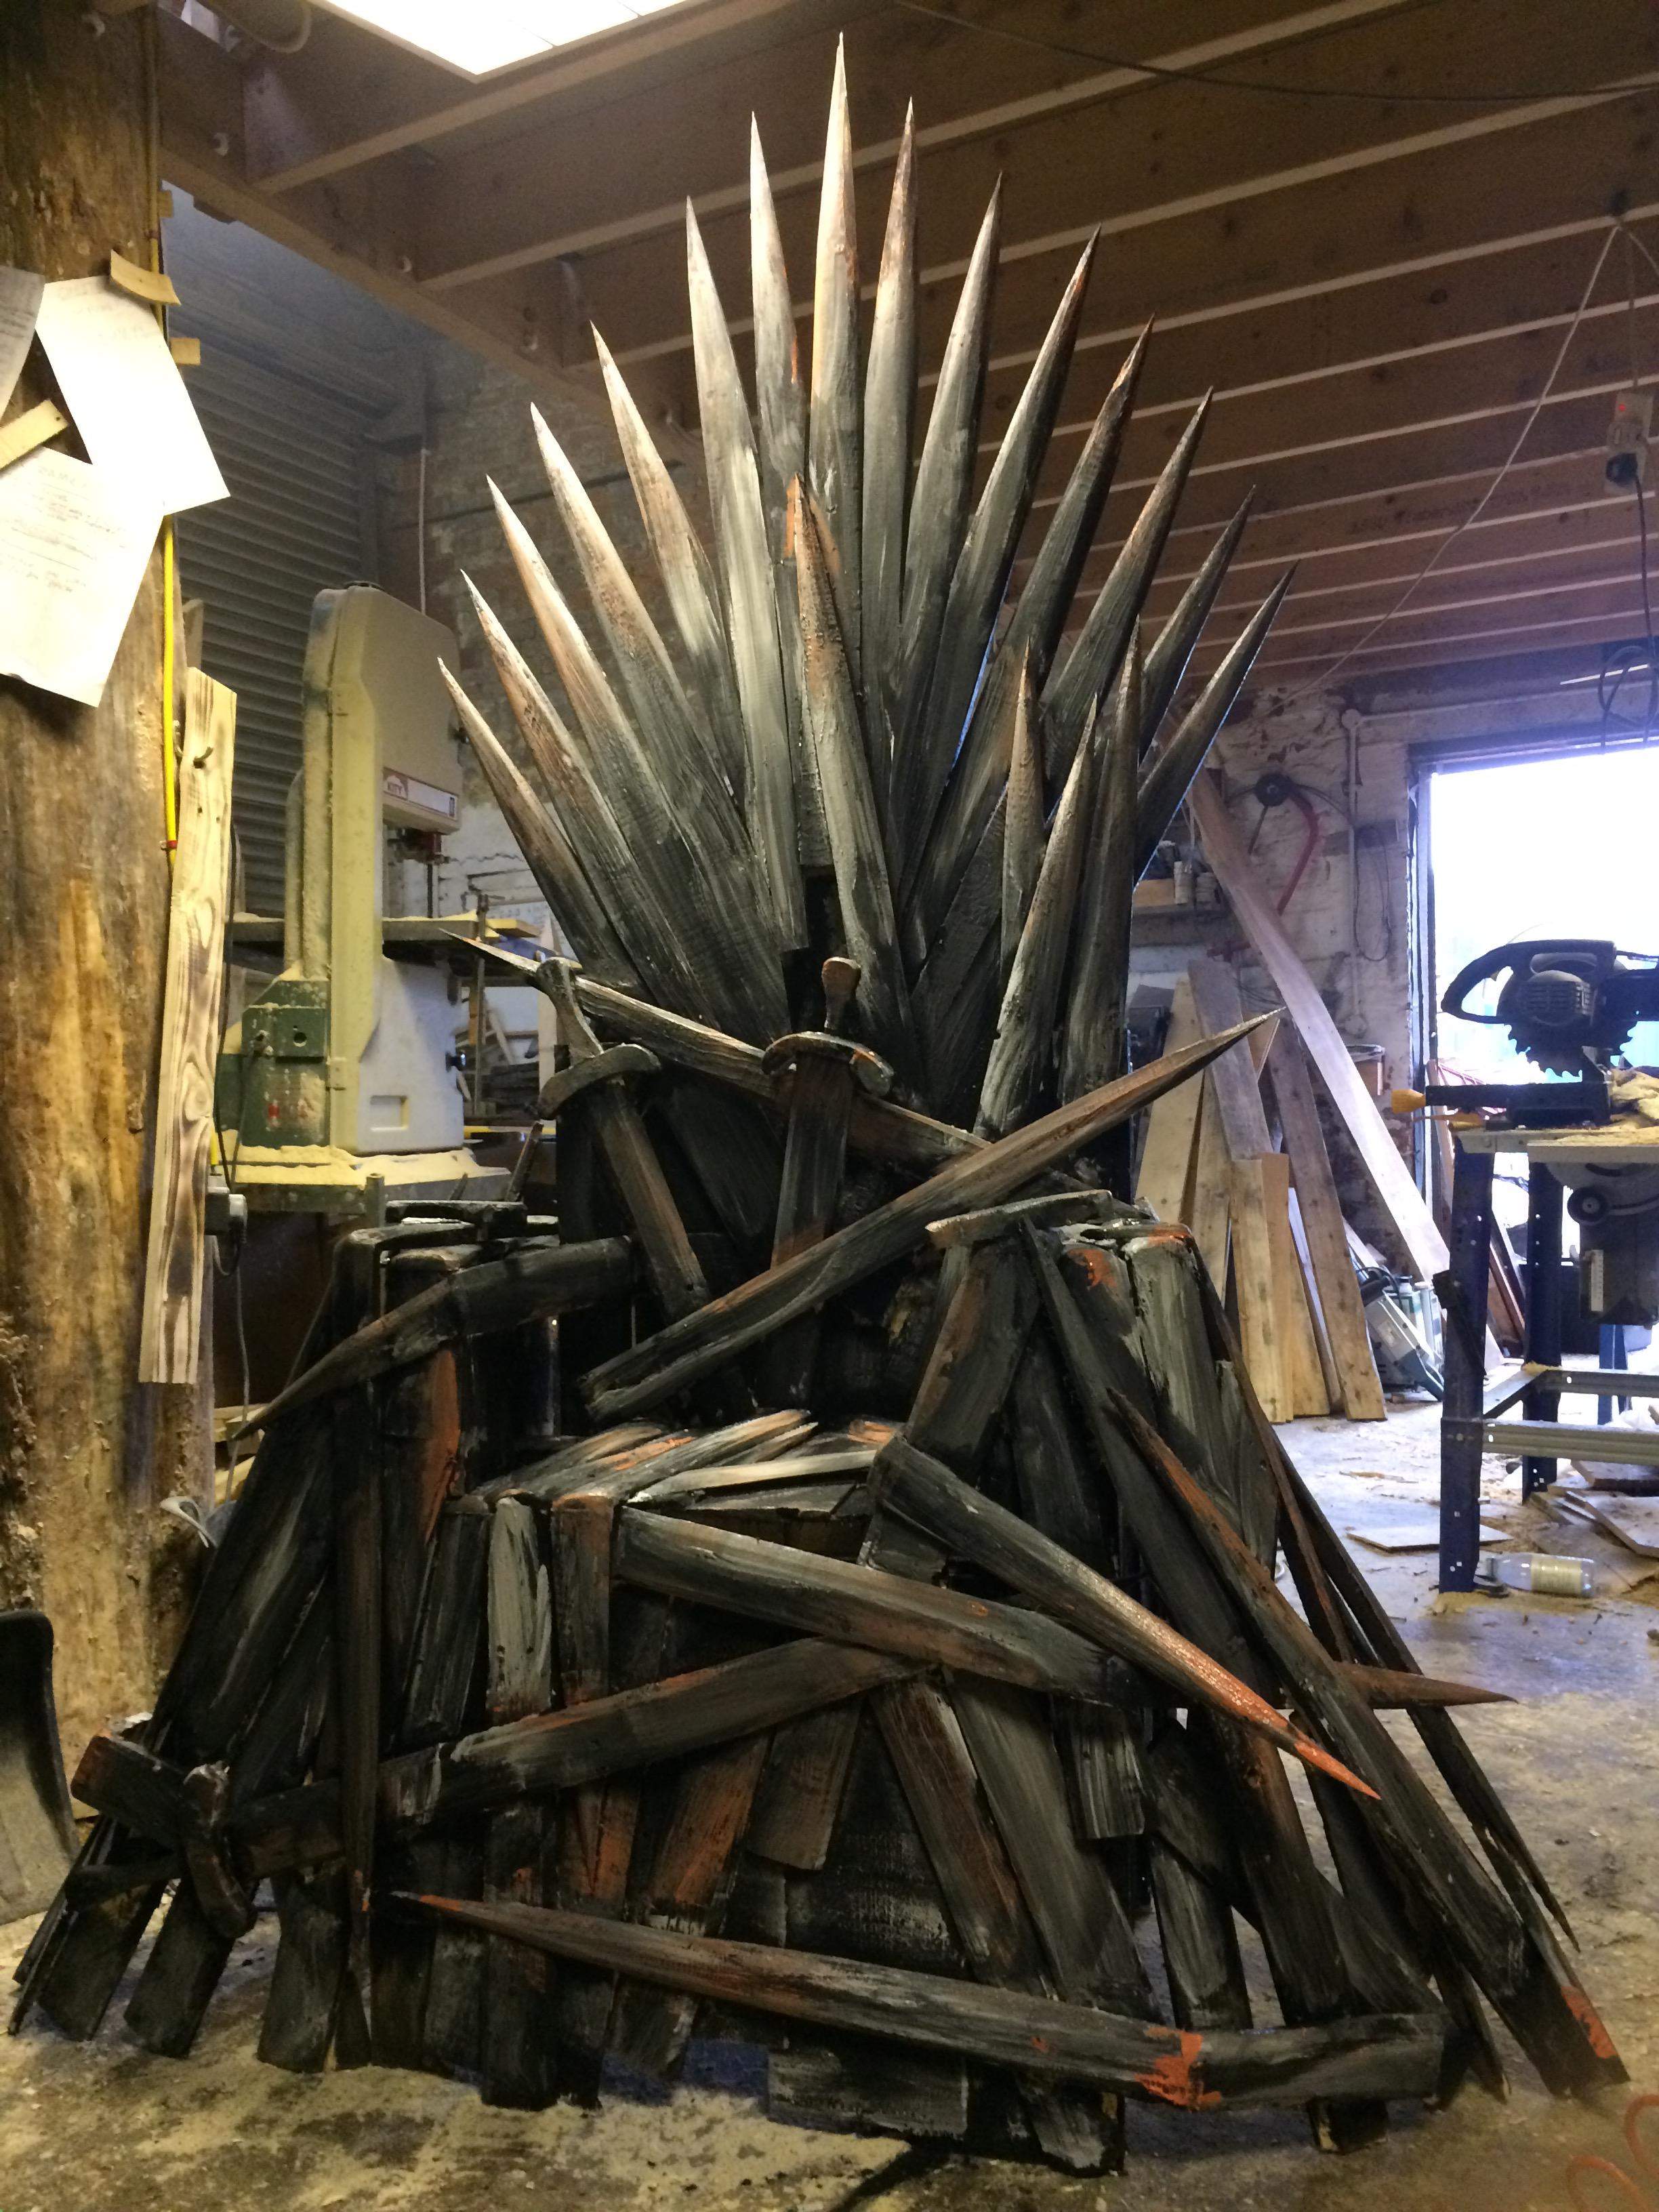 Iron Throne style chair